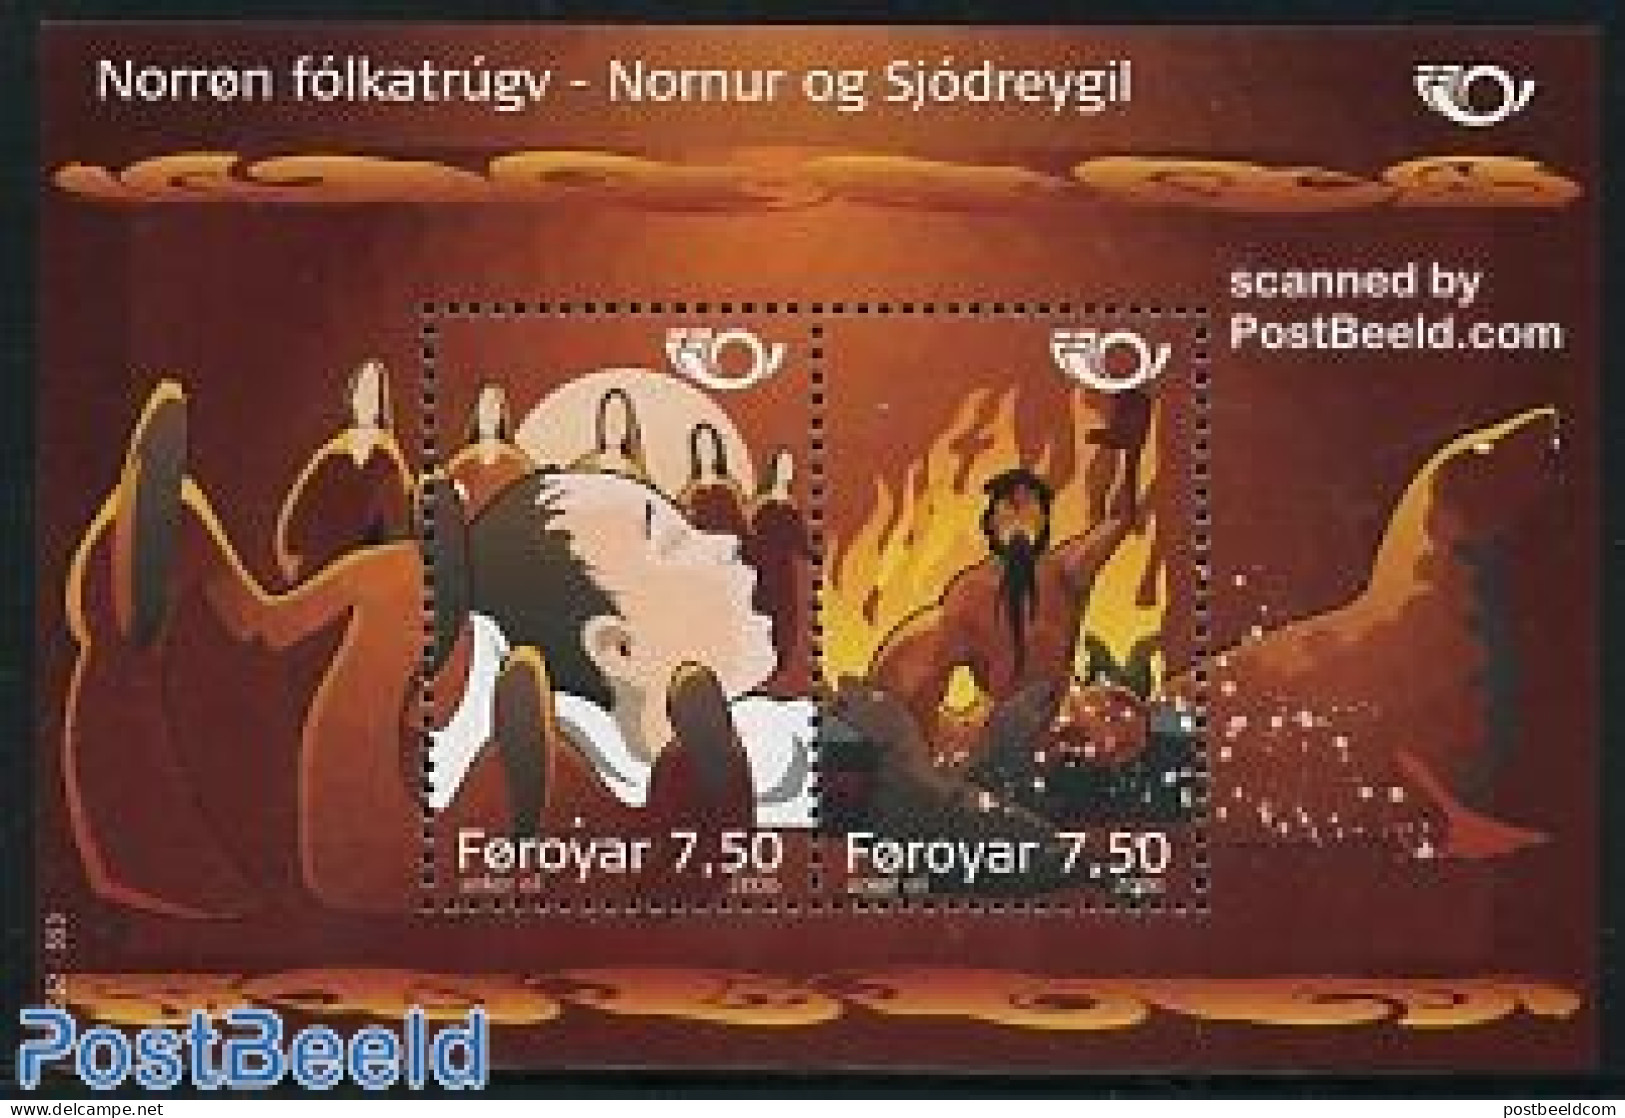 Faroe Islands 2006 Norden, Mythology S/s, Mint NH, History - Europa Hang-on Issues - Art - Fairytales - Ideas Europeas